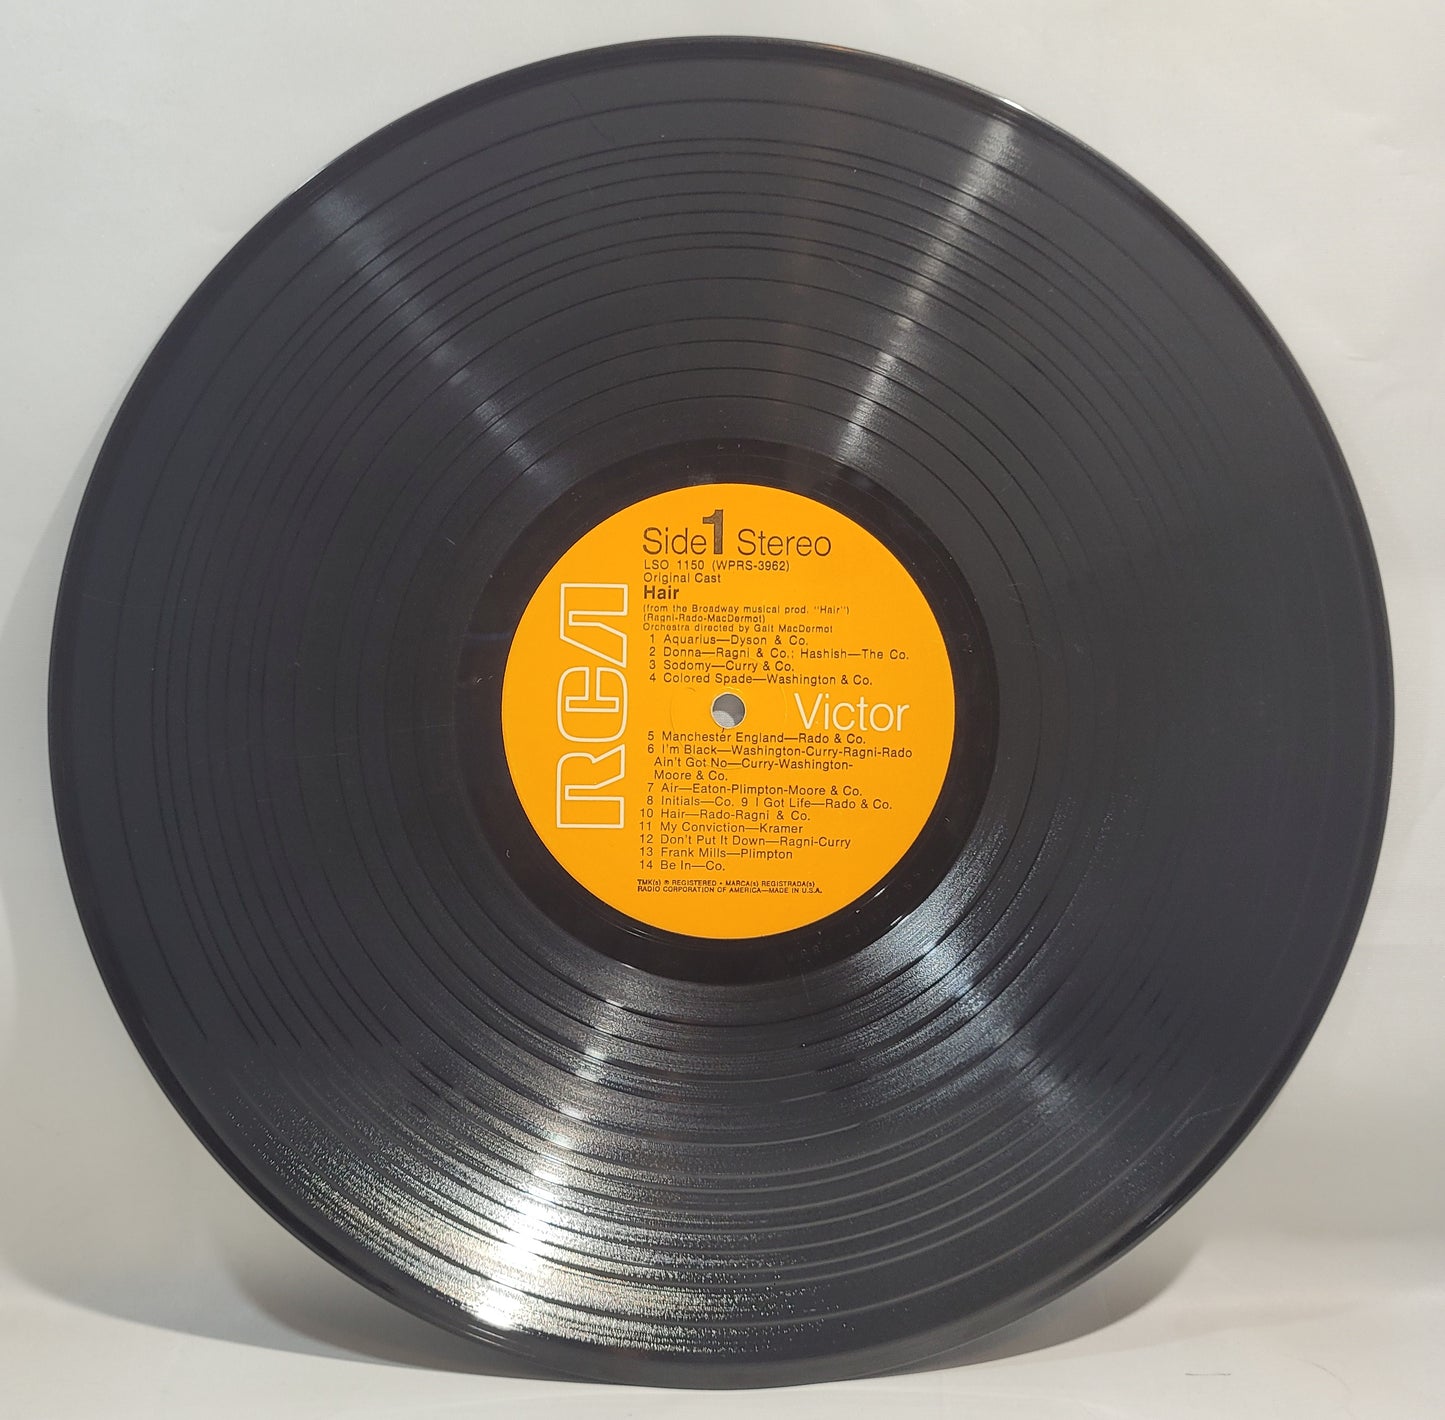 Soundtrack - Hair (The American Tribal Love-Rock Musical) [Vinyl Record LP] [C]